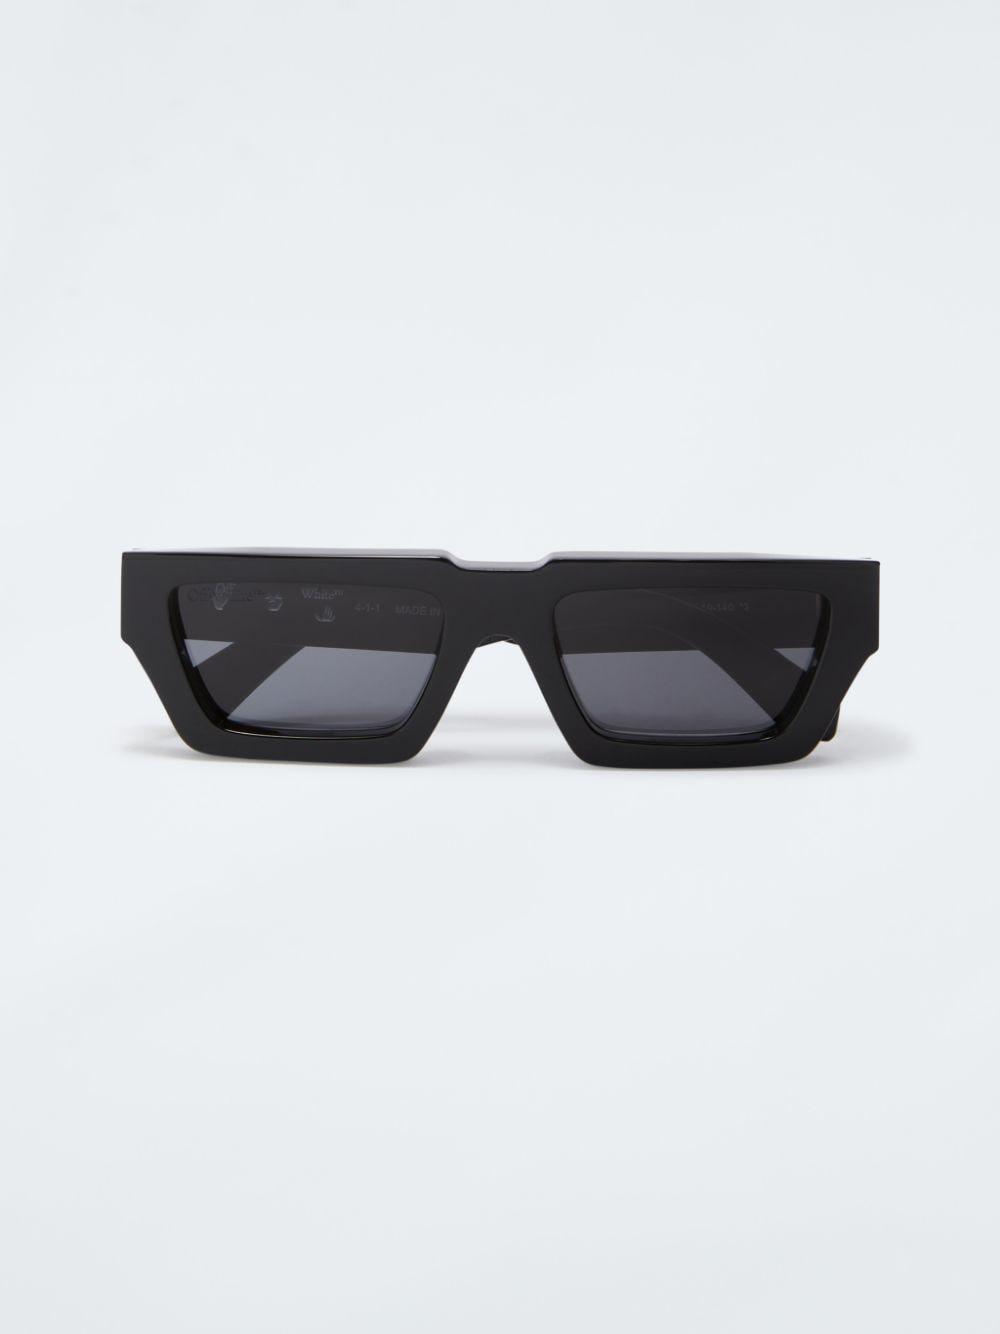 Off-White c/o Virgil Abloh Manchester Sunglasses in Black | Lyst